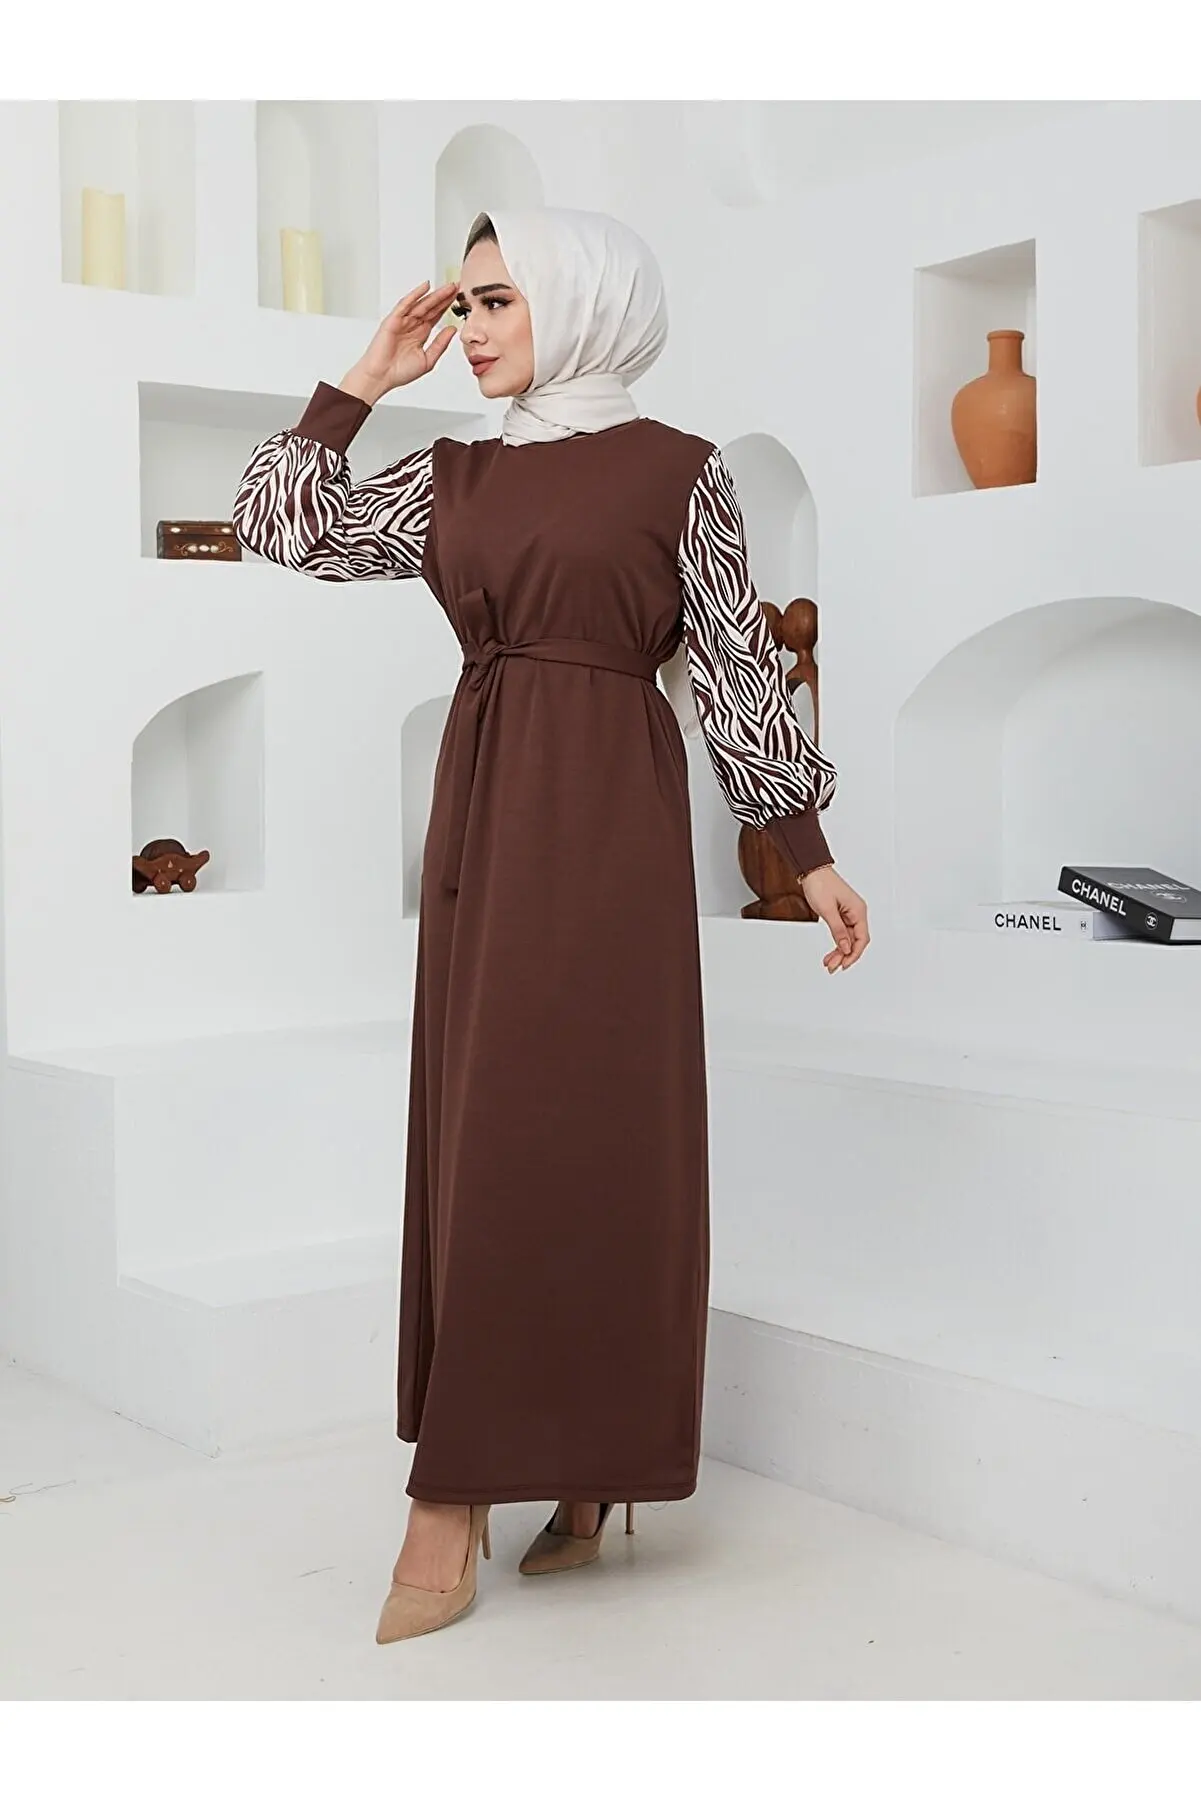 Muslim Women Dress Self-Kemerli Temporary Shed Sleeve Black Dress soft Crepe Fabric 2022 hot summer season Long Ferace Abaya